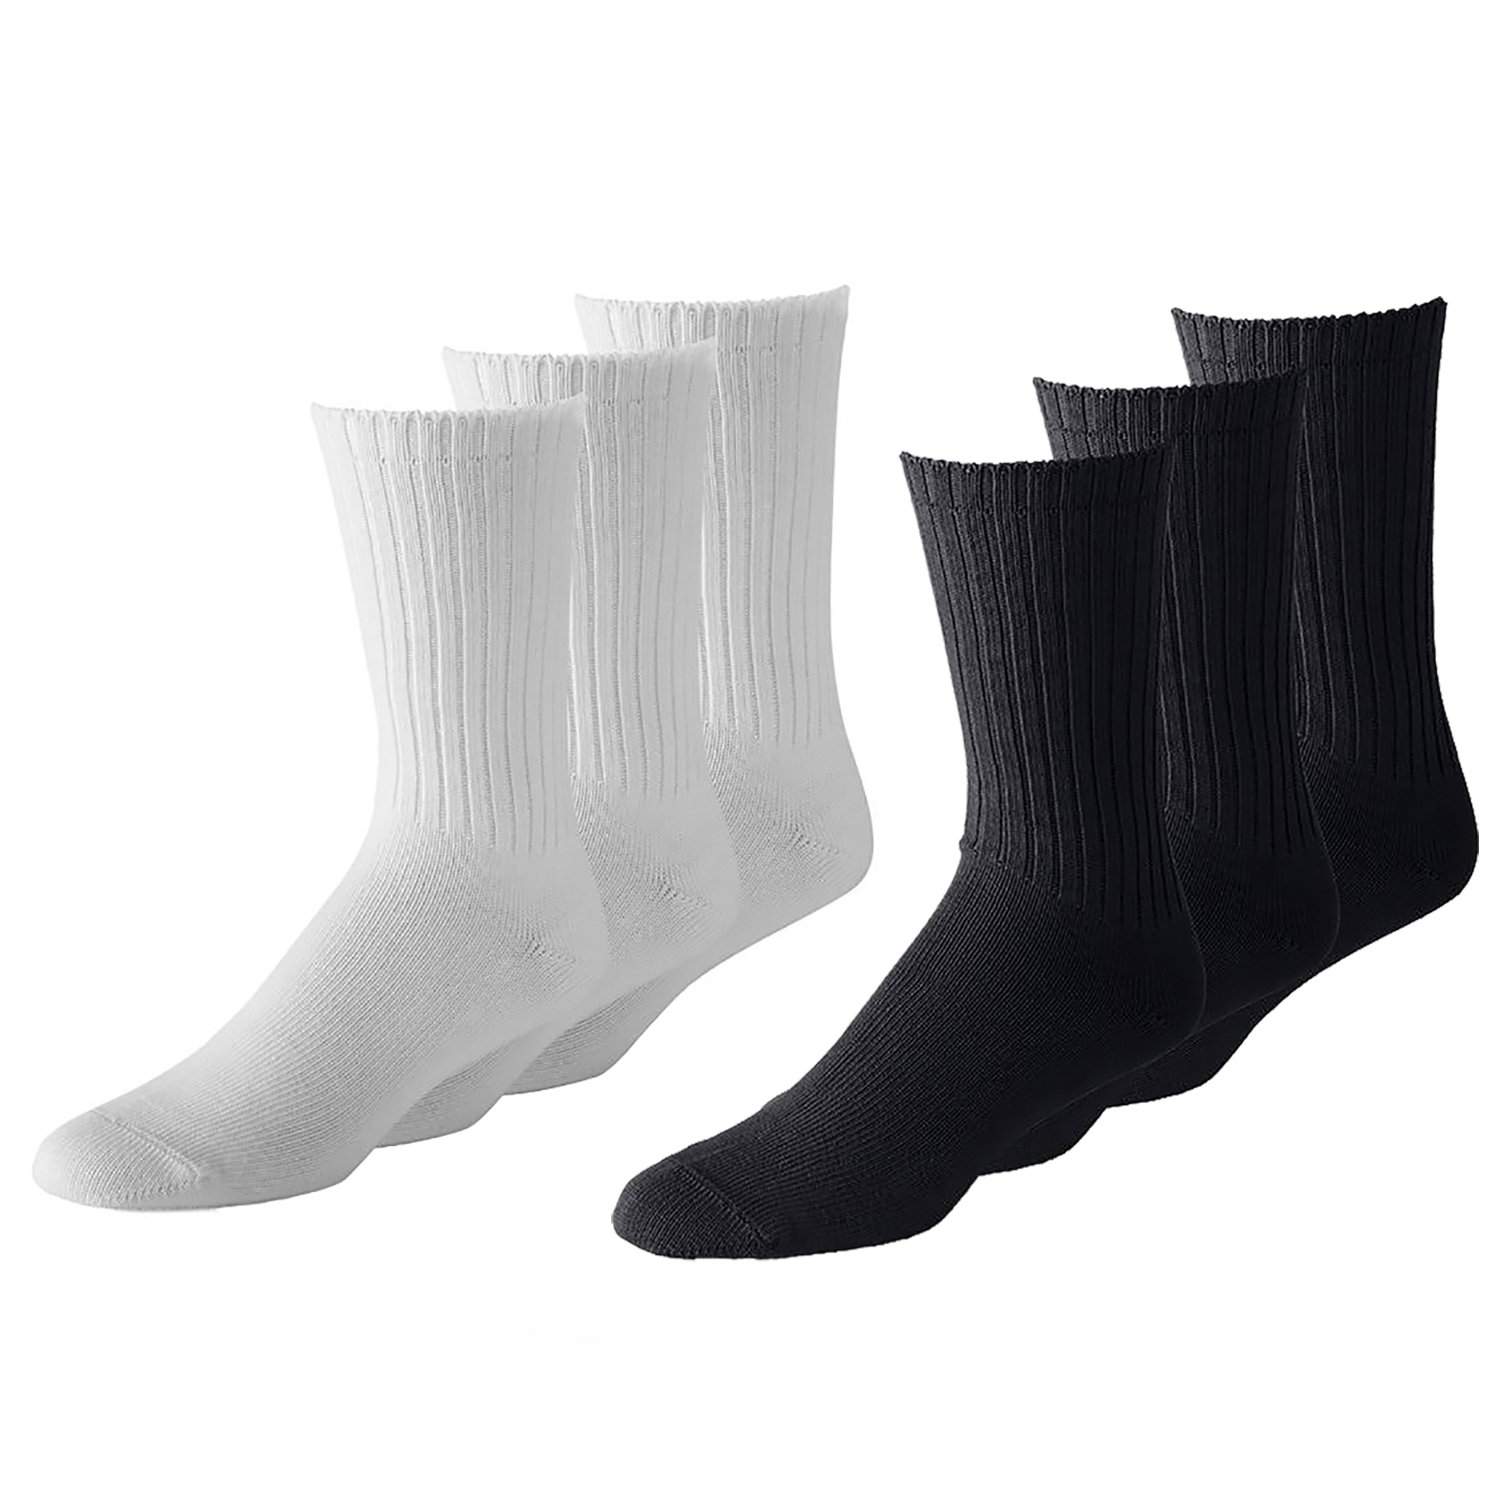 84 Pairs Men's Athletic Crew Socks - Bulk Lot Packs - Any Shoe Size